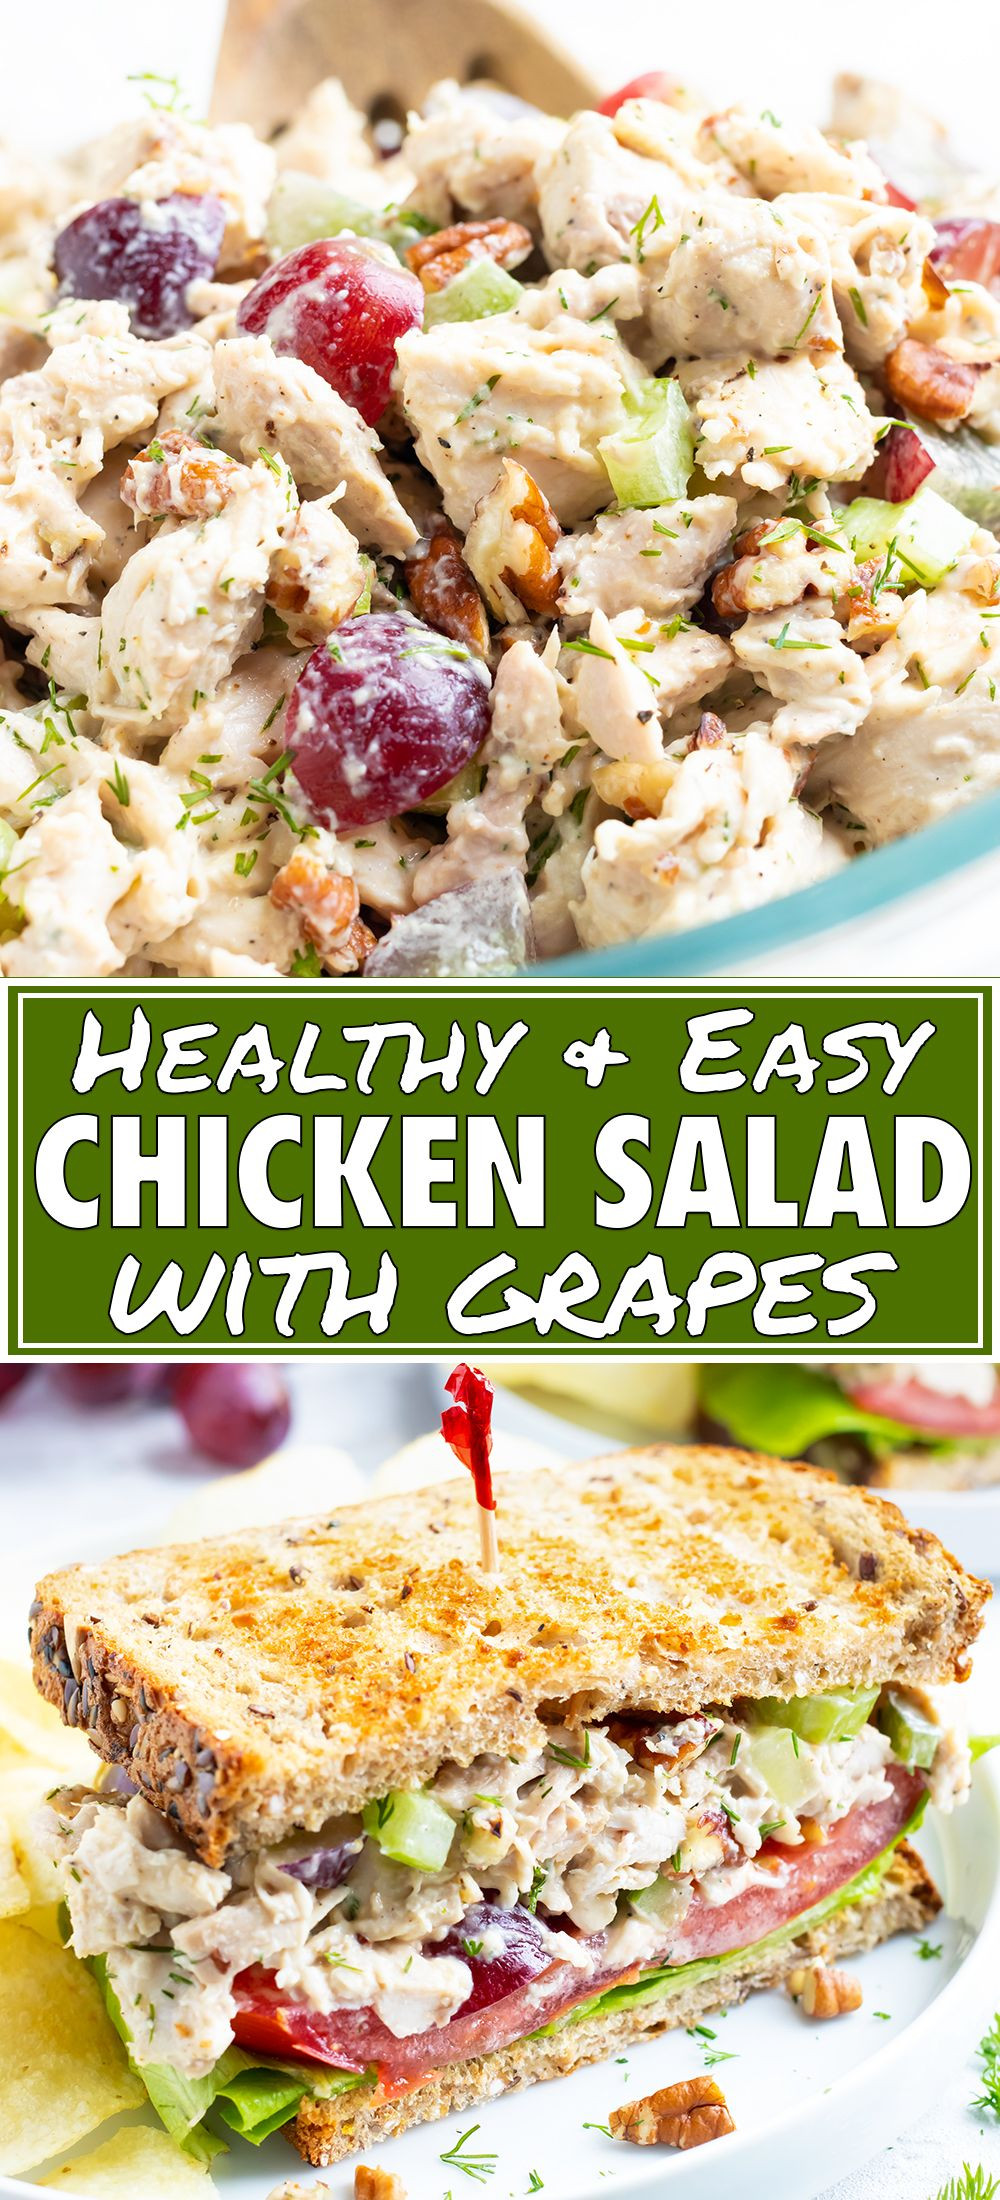 Easy Chicken Salad Recipe With Grapes
 Chicken Salad with Grapes Recipe